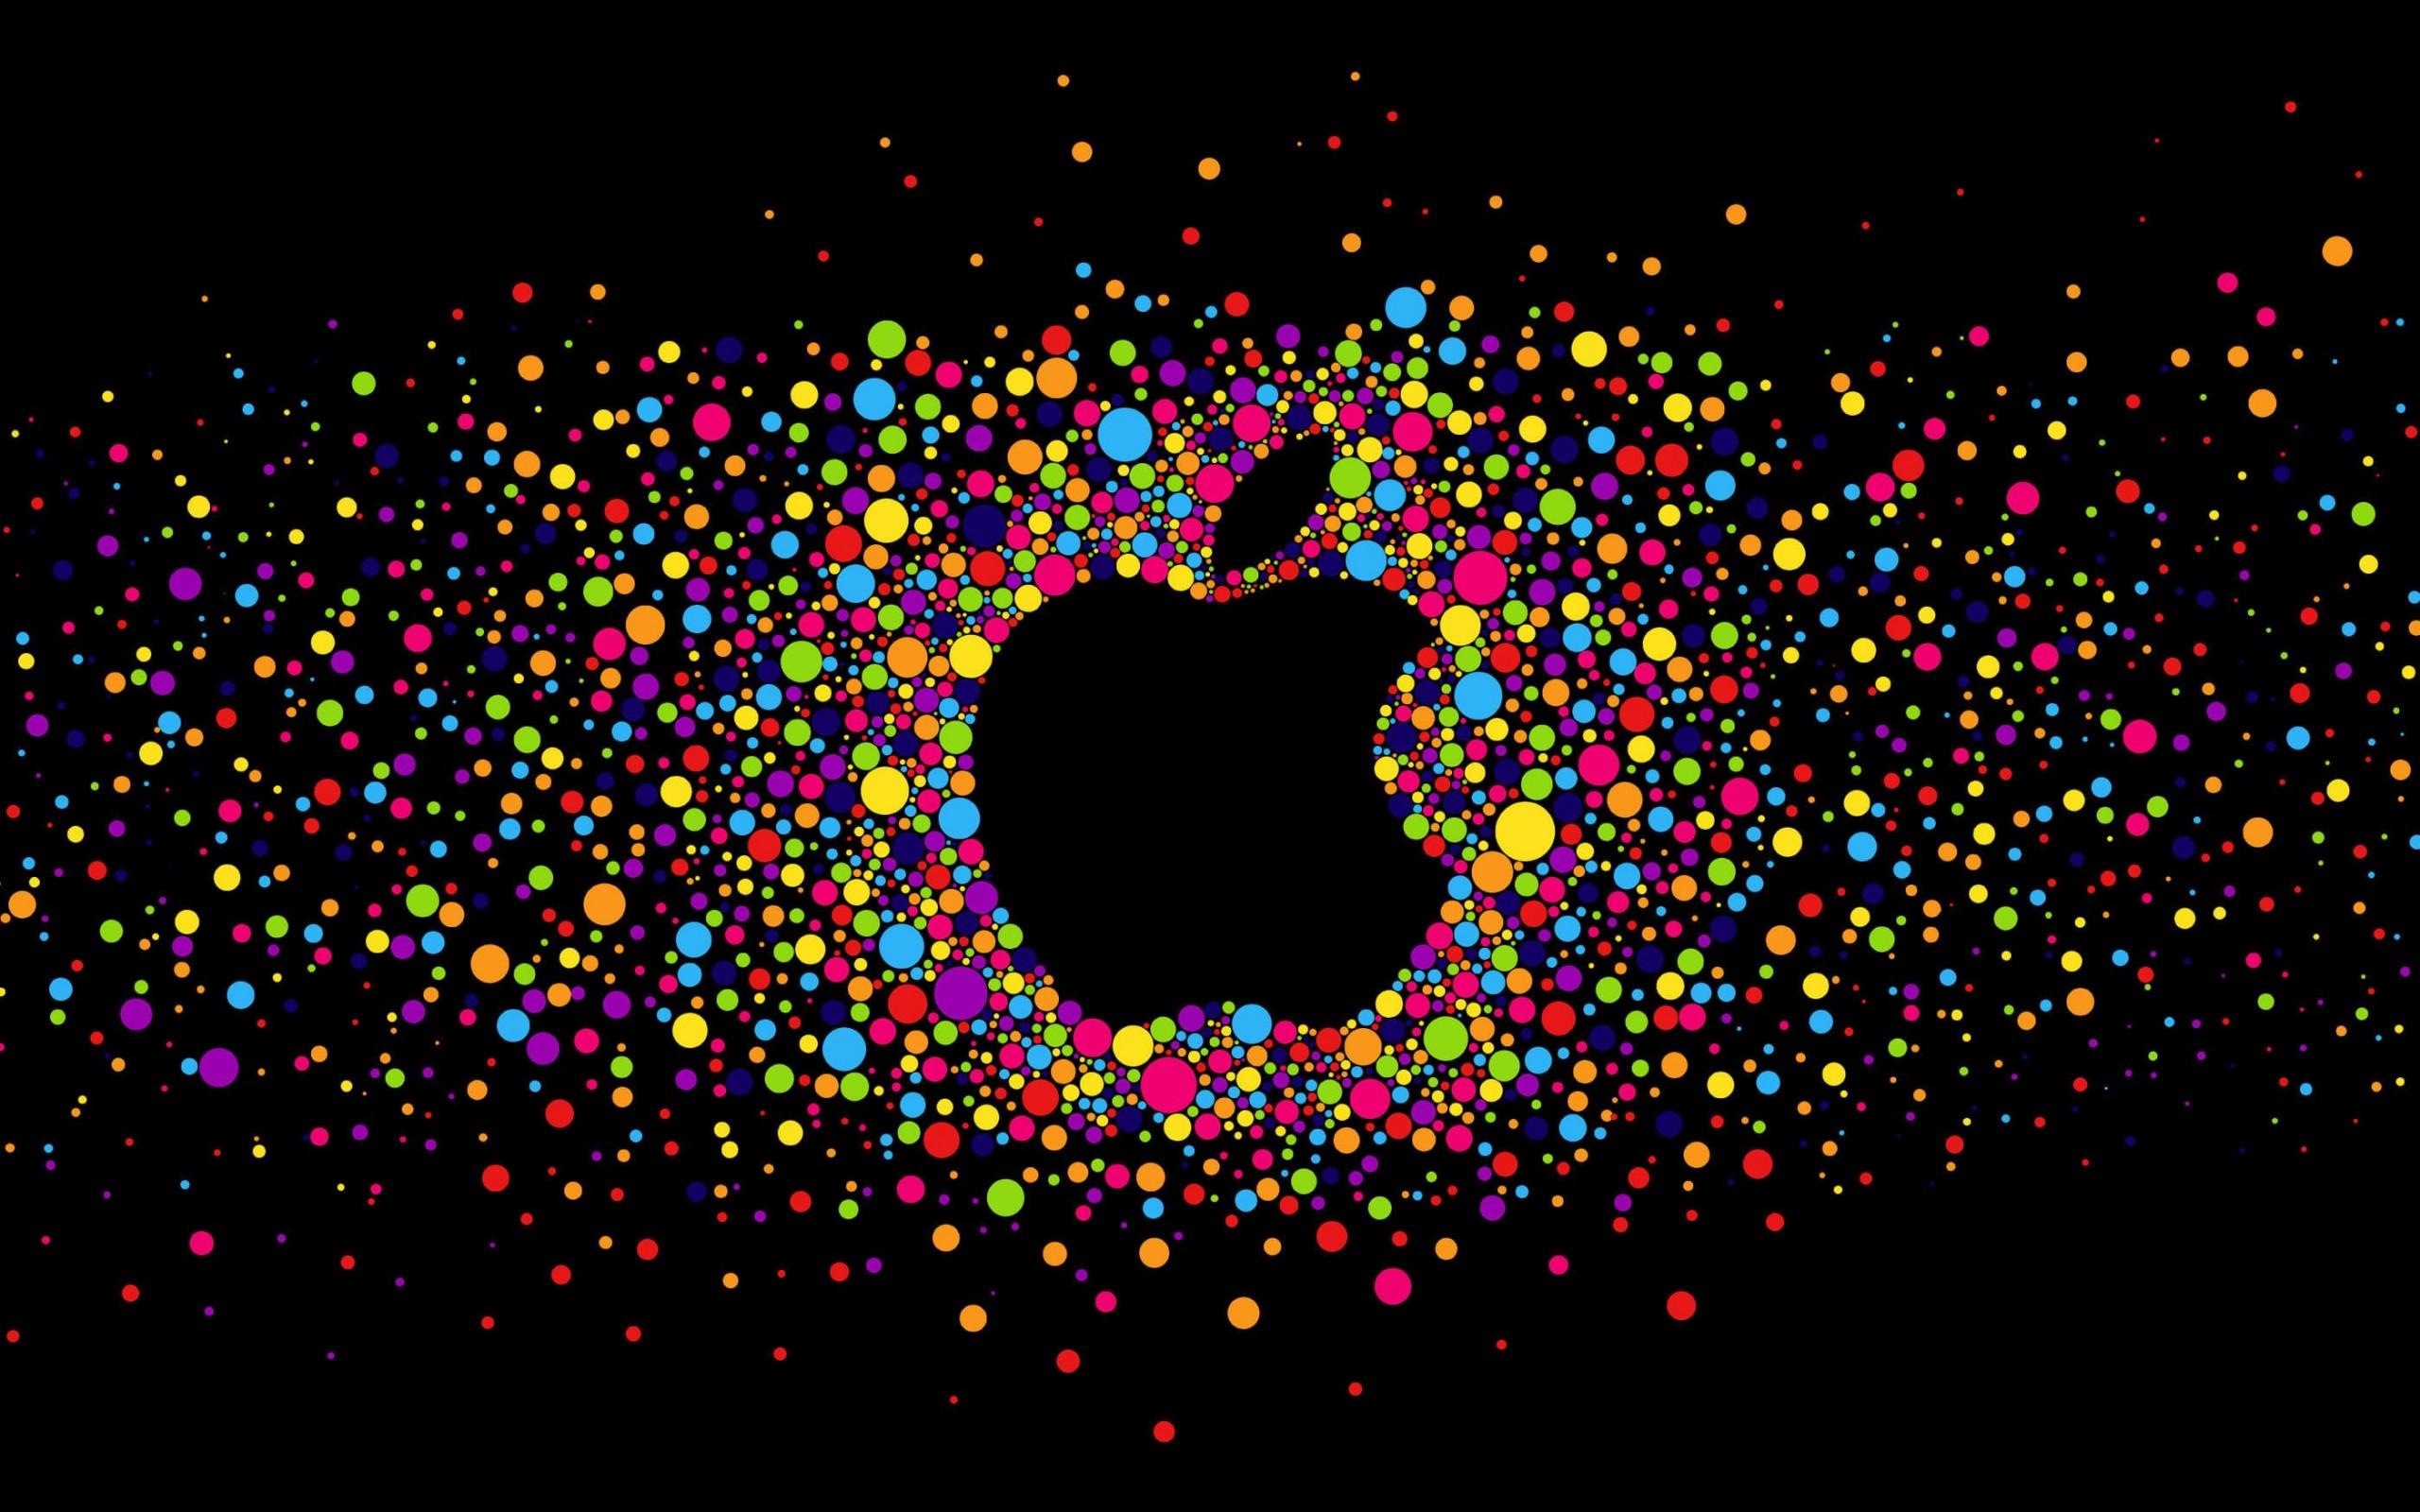 Black Apple Logo Particles Wallpaper for Desktop 2560x1600